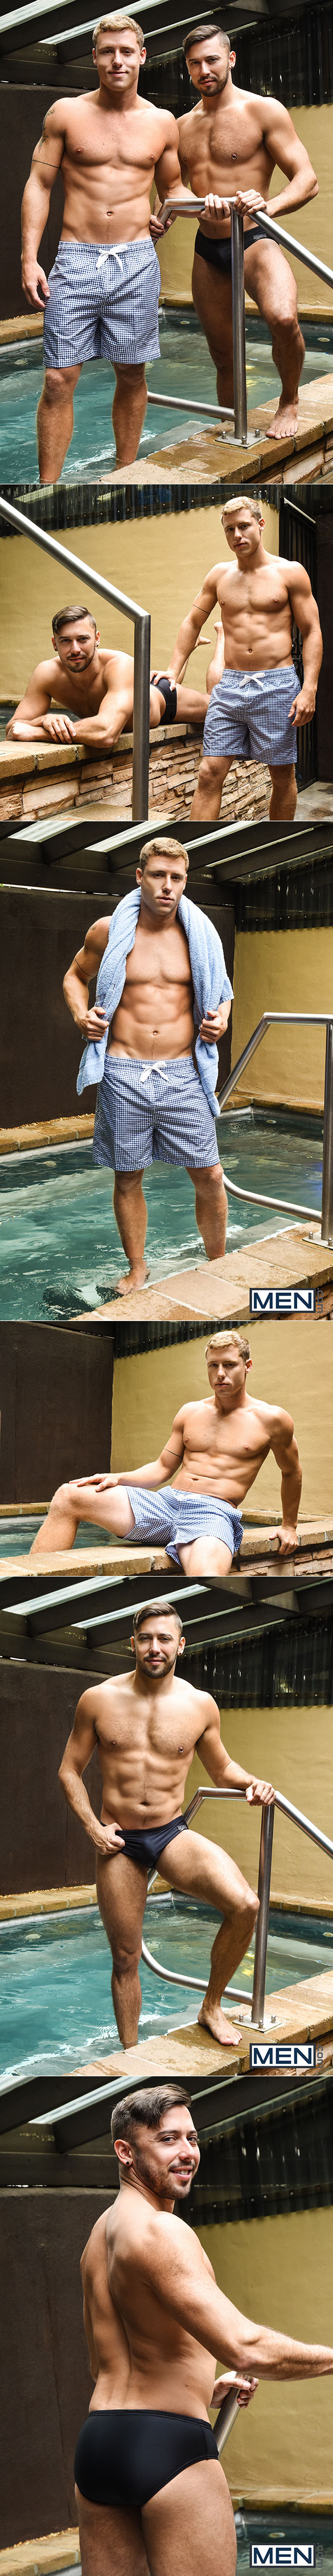 Men.com: Justin Matthews fucks Shane Jackson in "What's in the Hot Tub?"